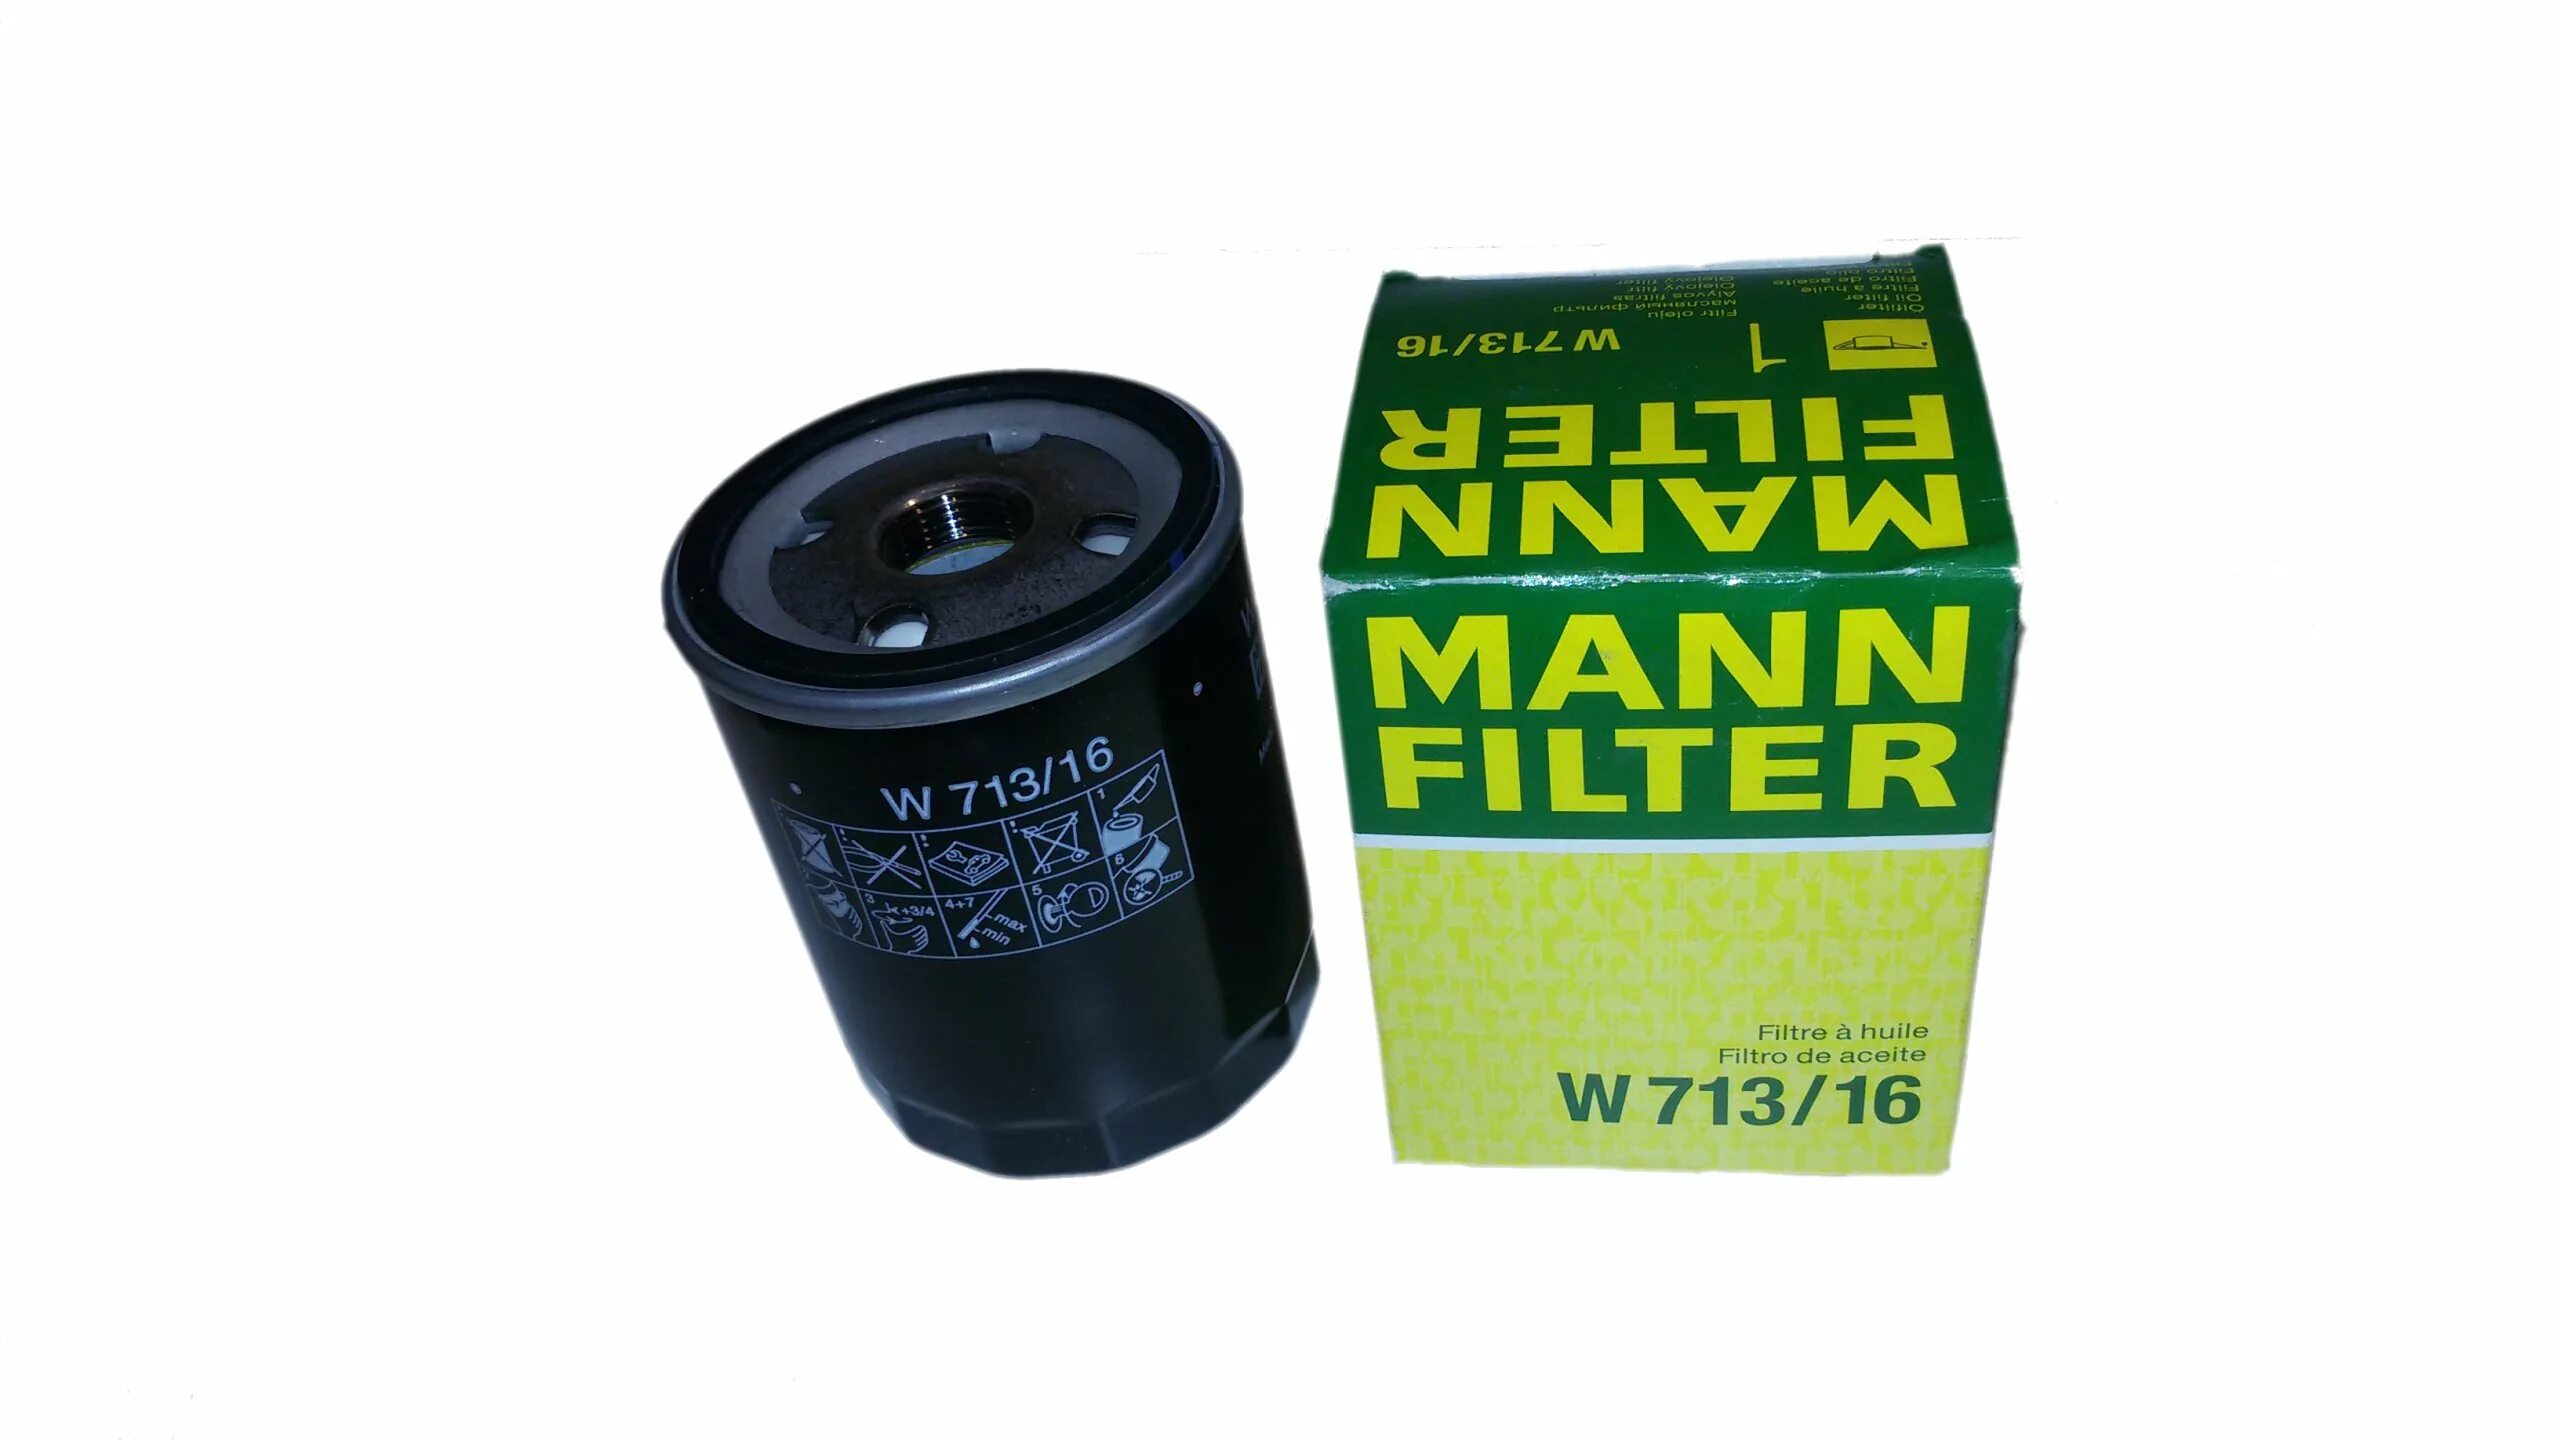 Фильтр масляный Манн 406 двигатель. Фильтр масляный Mann w713/36. Mann w713/18 фильтр масляный. Mann w713/16. Фильтр масла газель